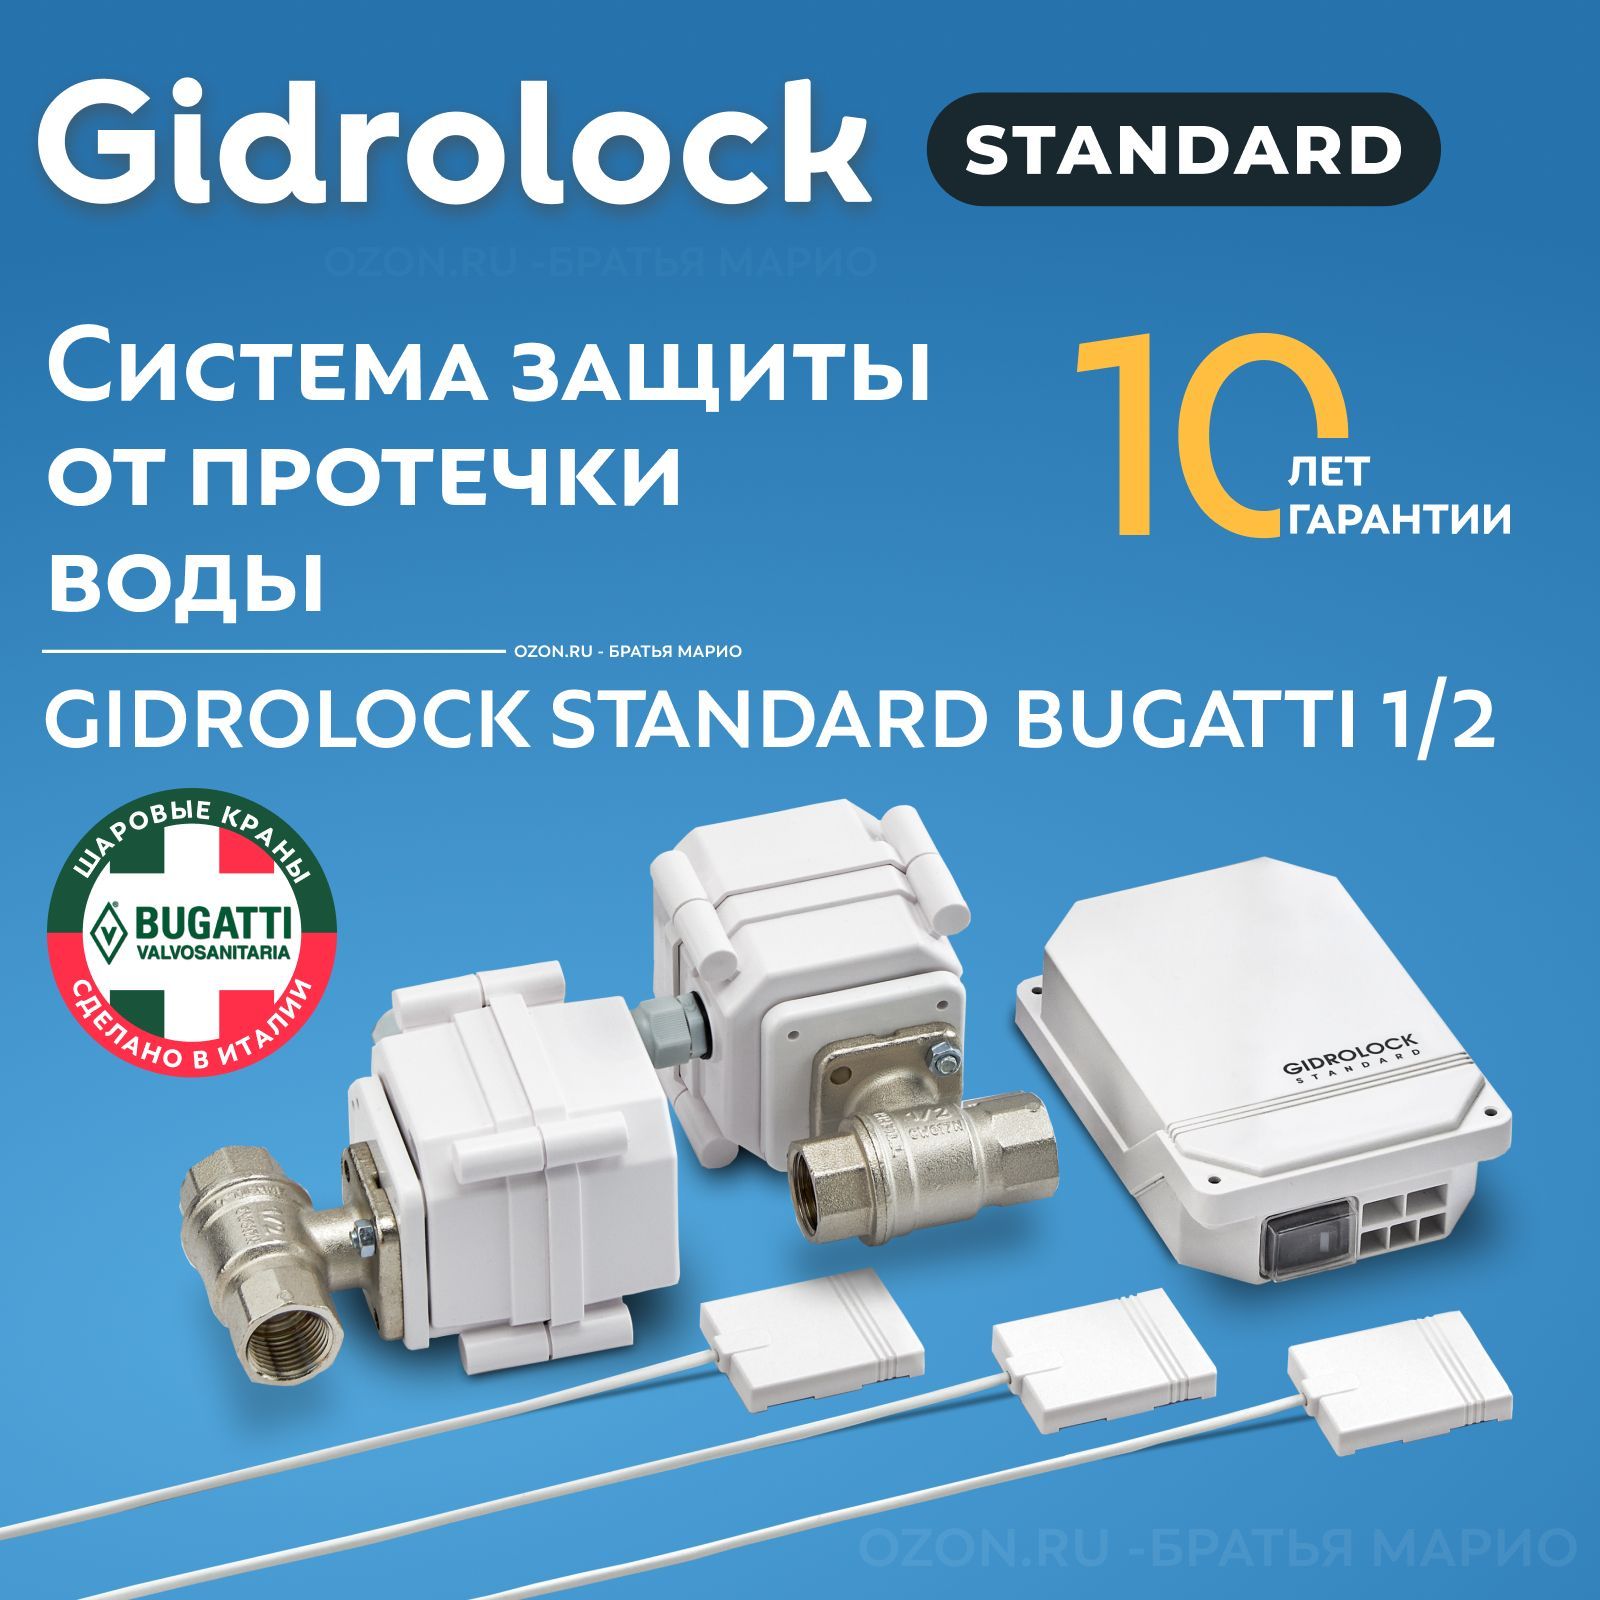 Gidrolock Standard Wi-Fi. Gidrolock bugatti 1 2